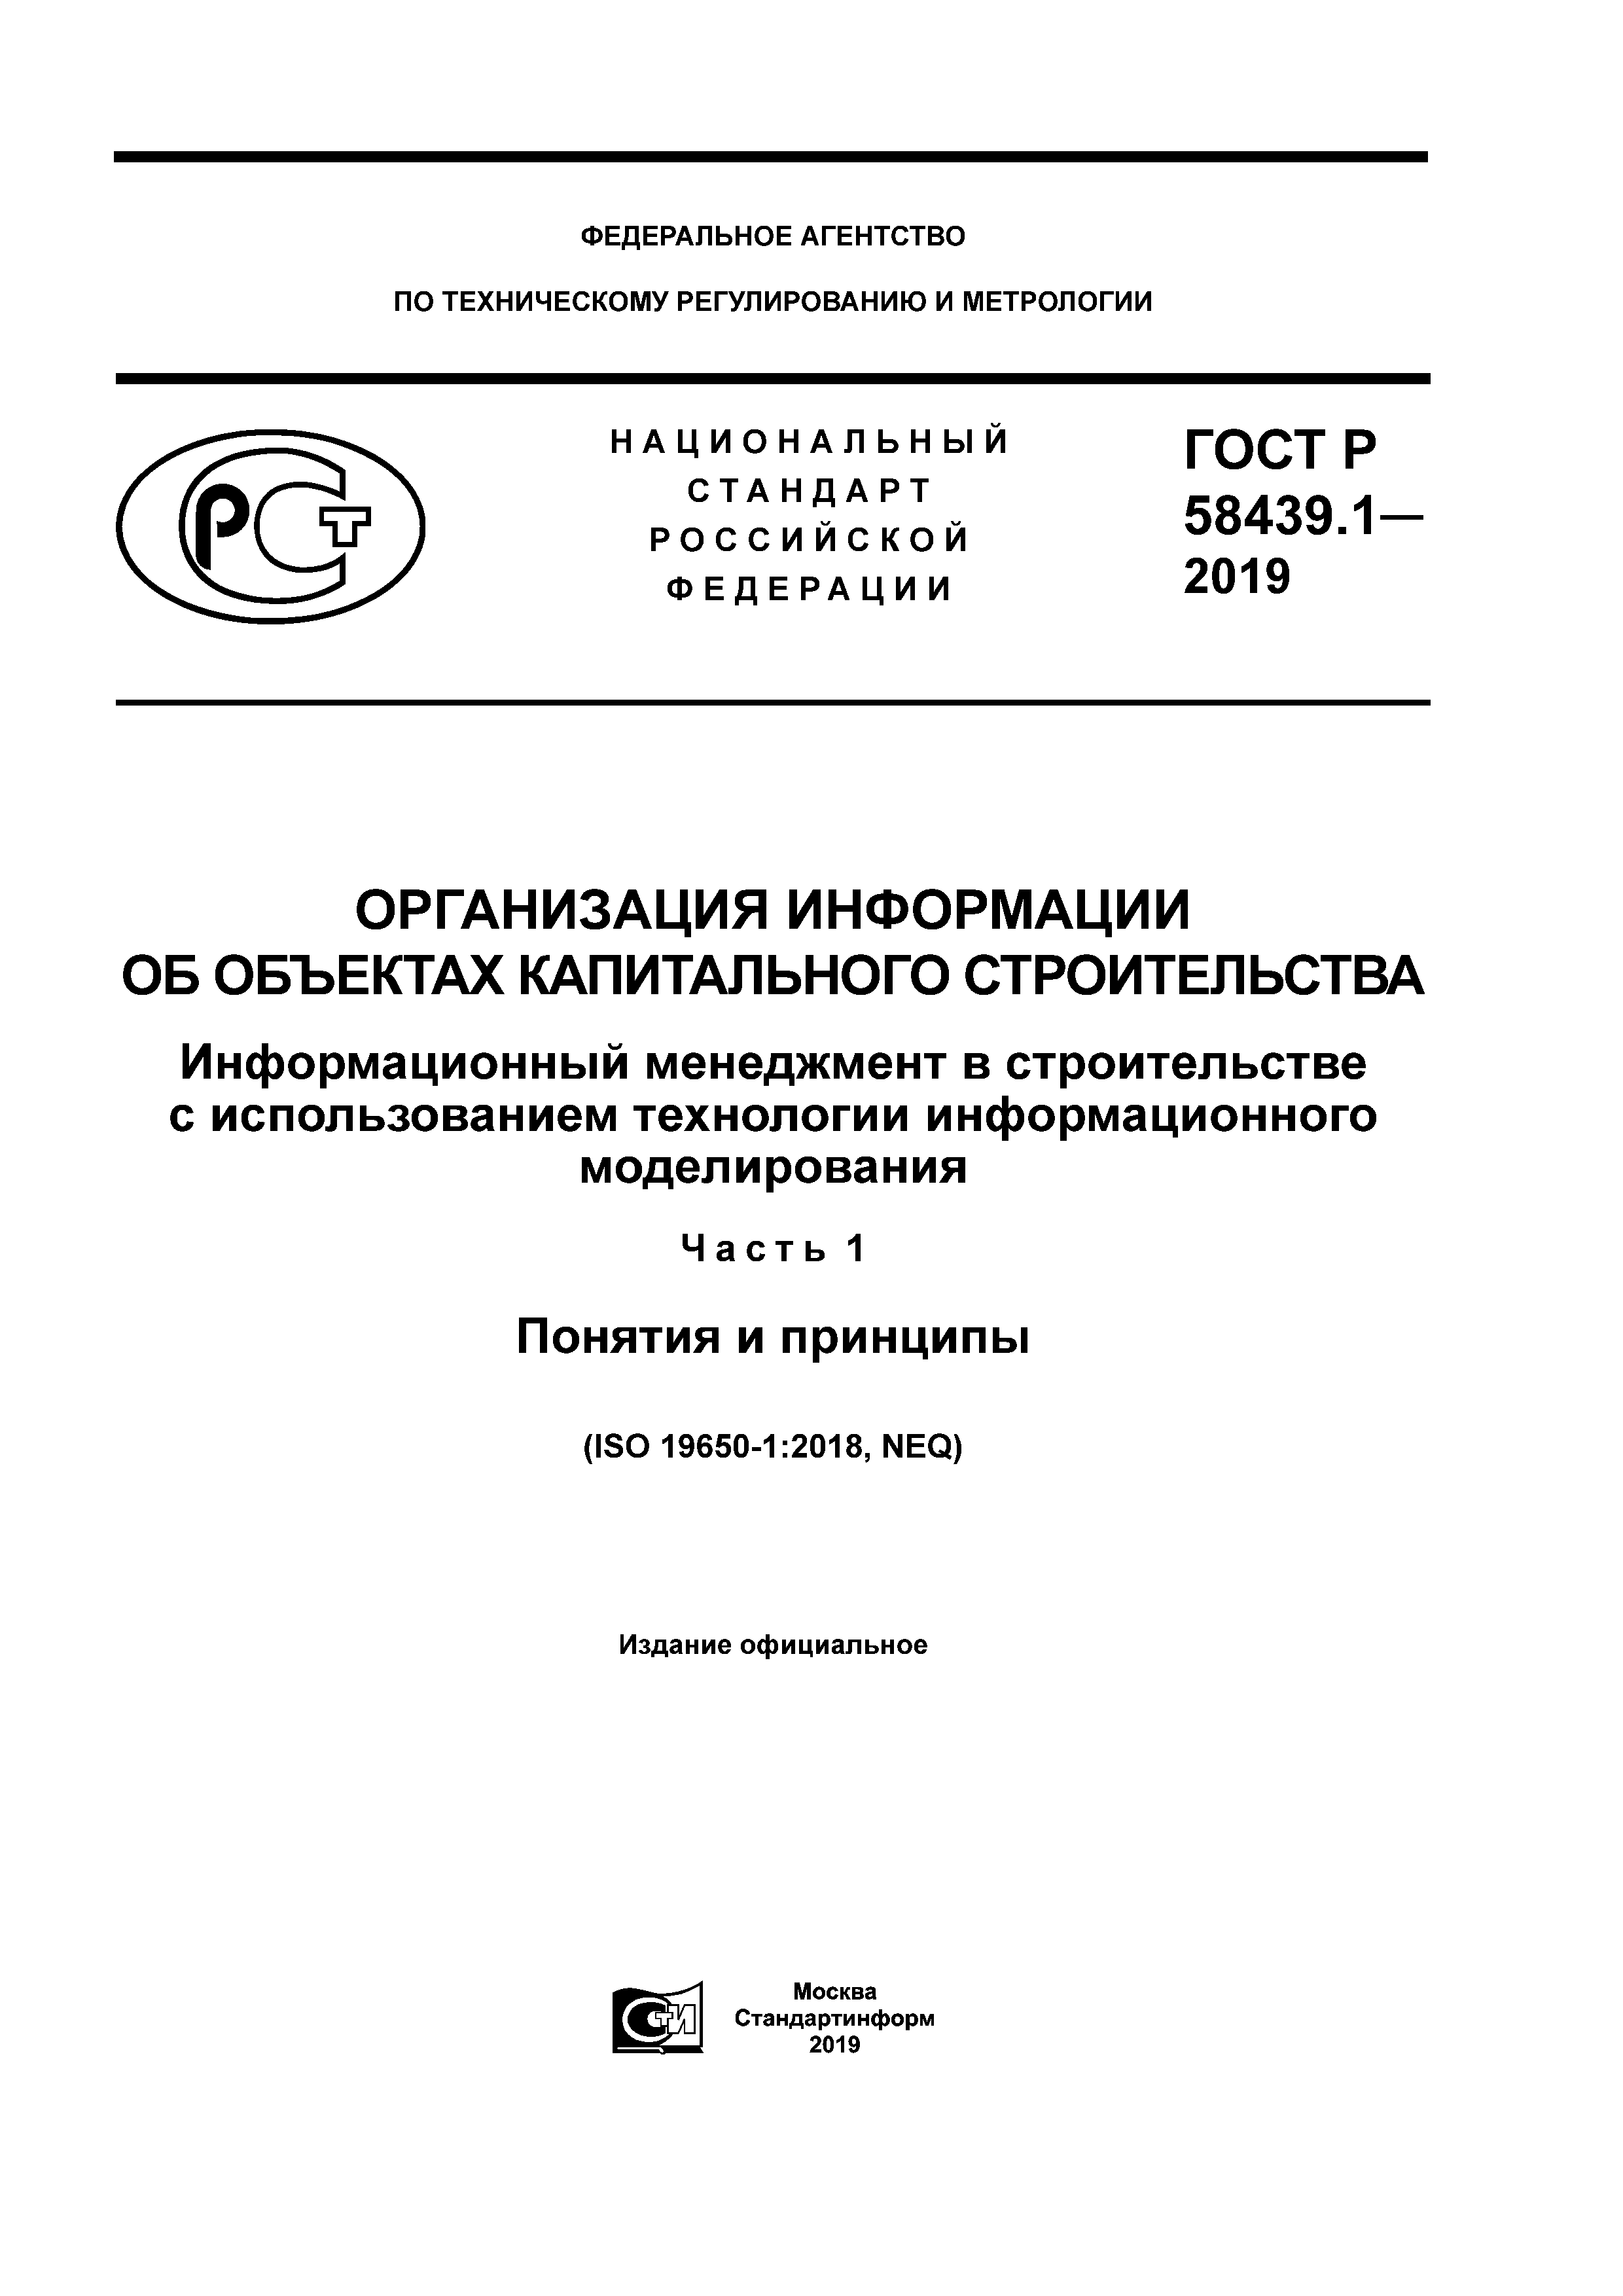 ГОСТ Р 58439.1-2019